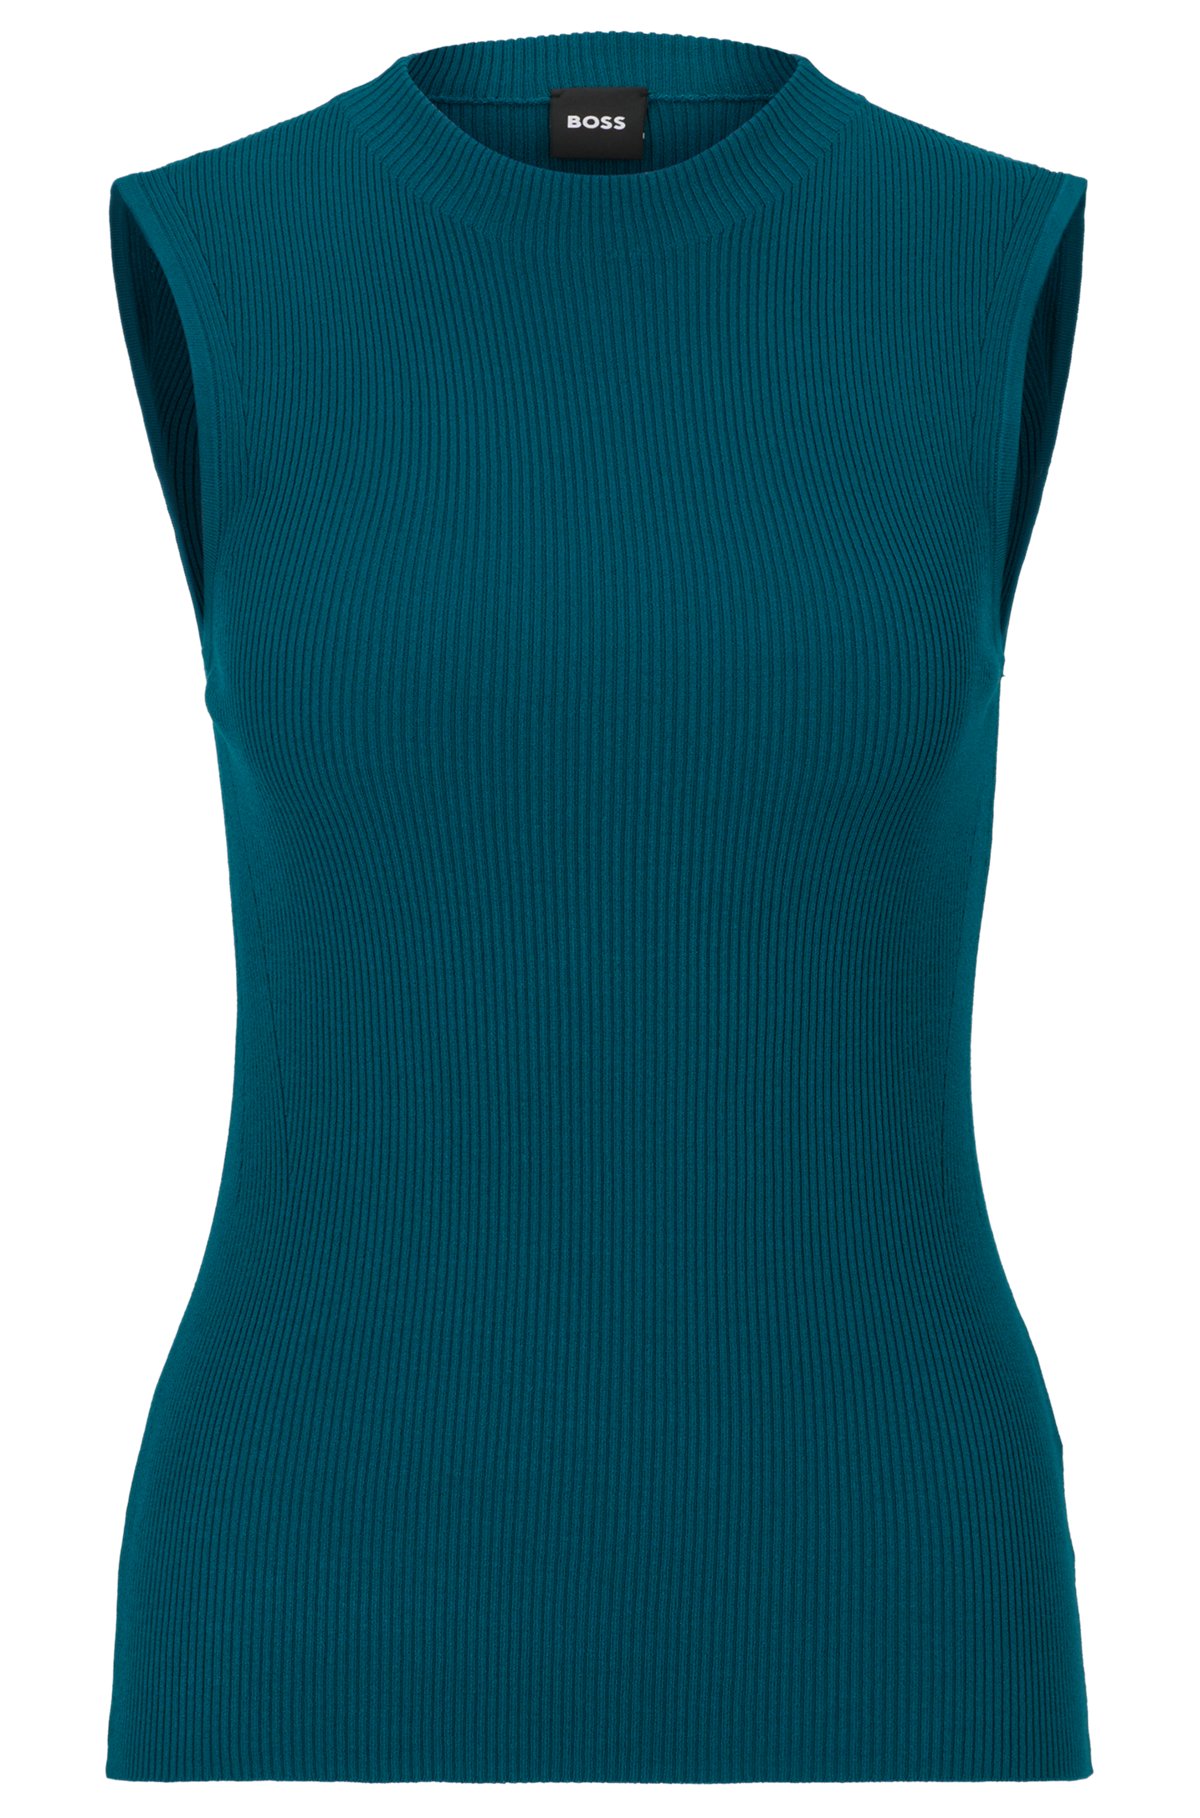 Sleeveless mock-neck top in ribbed fabric, Dark Green